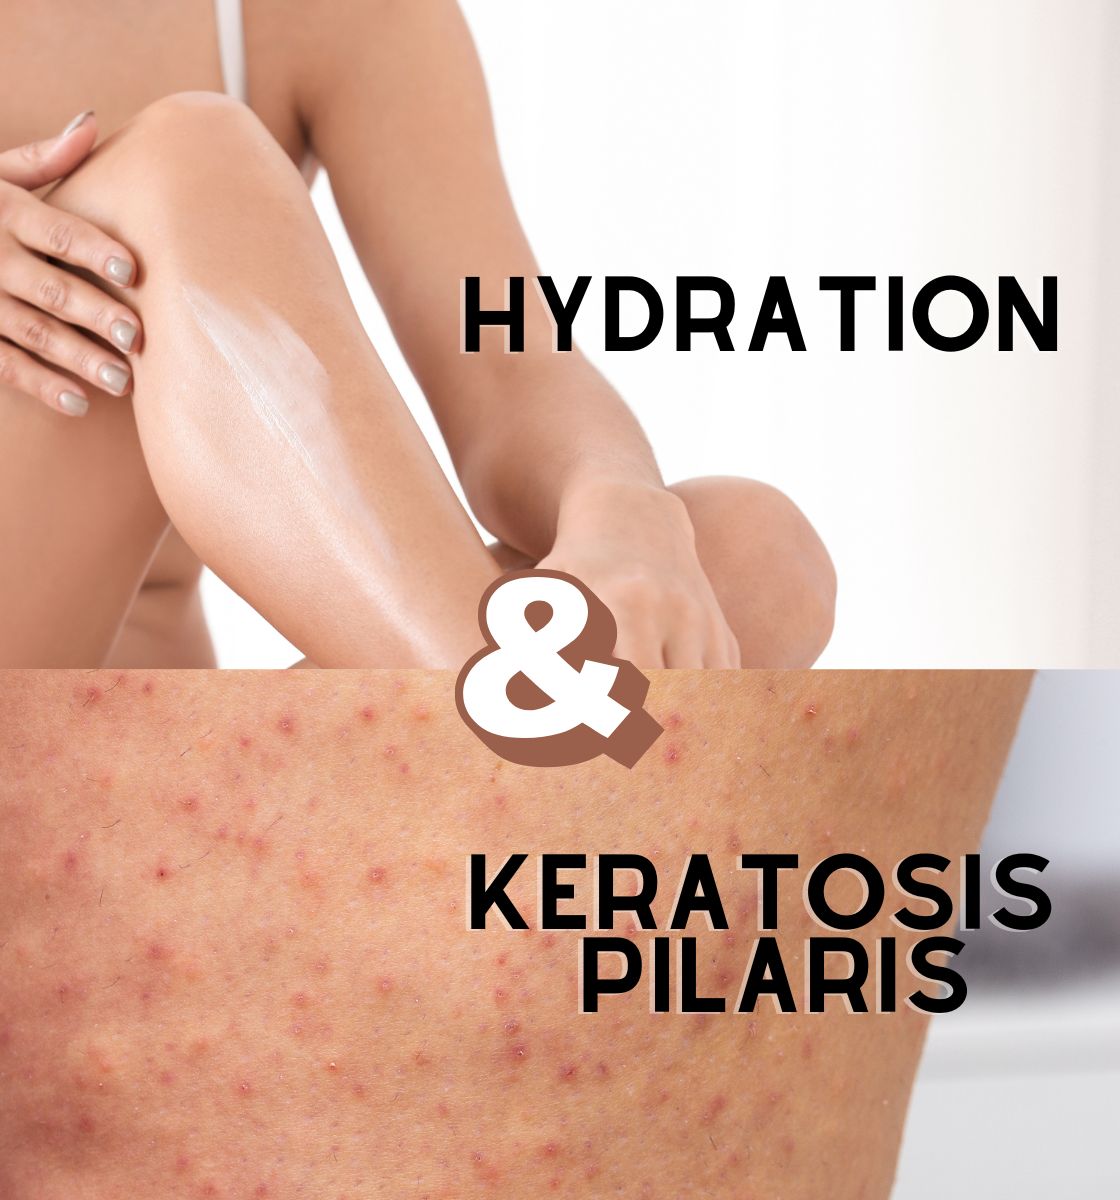 Hydration & Keratosis pilaris